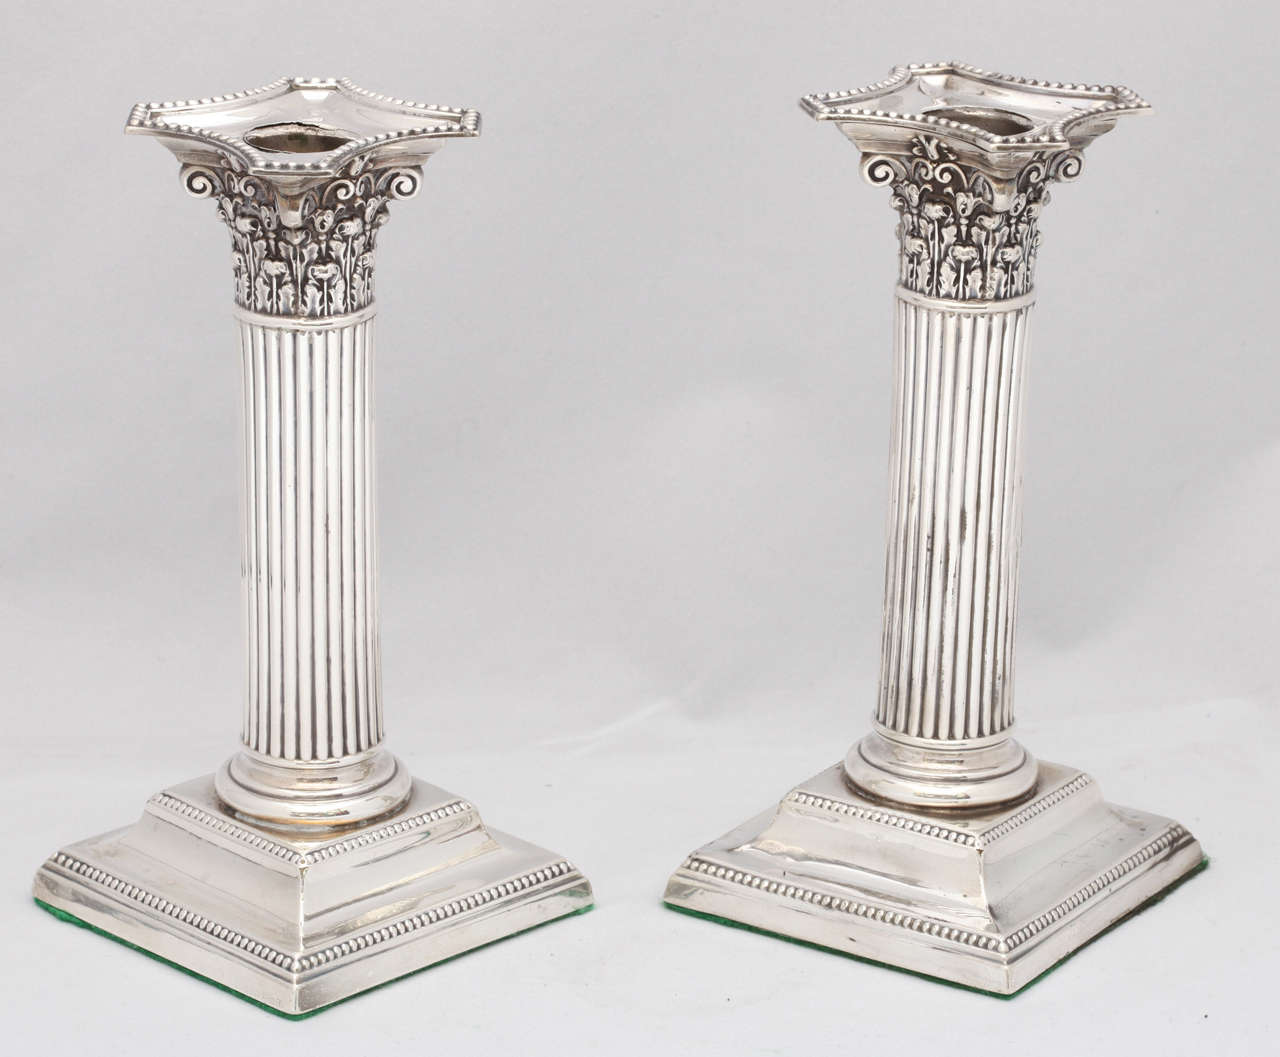 Pair of neoclassical, sterling silver, Victorian, Corinthian column-form candlesticks, Birmingham, England, 1897, H. Matthews - maker. Measures: 6 3/4